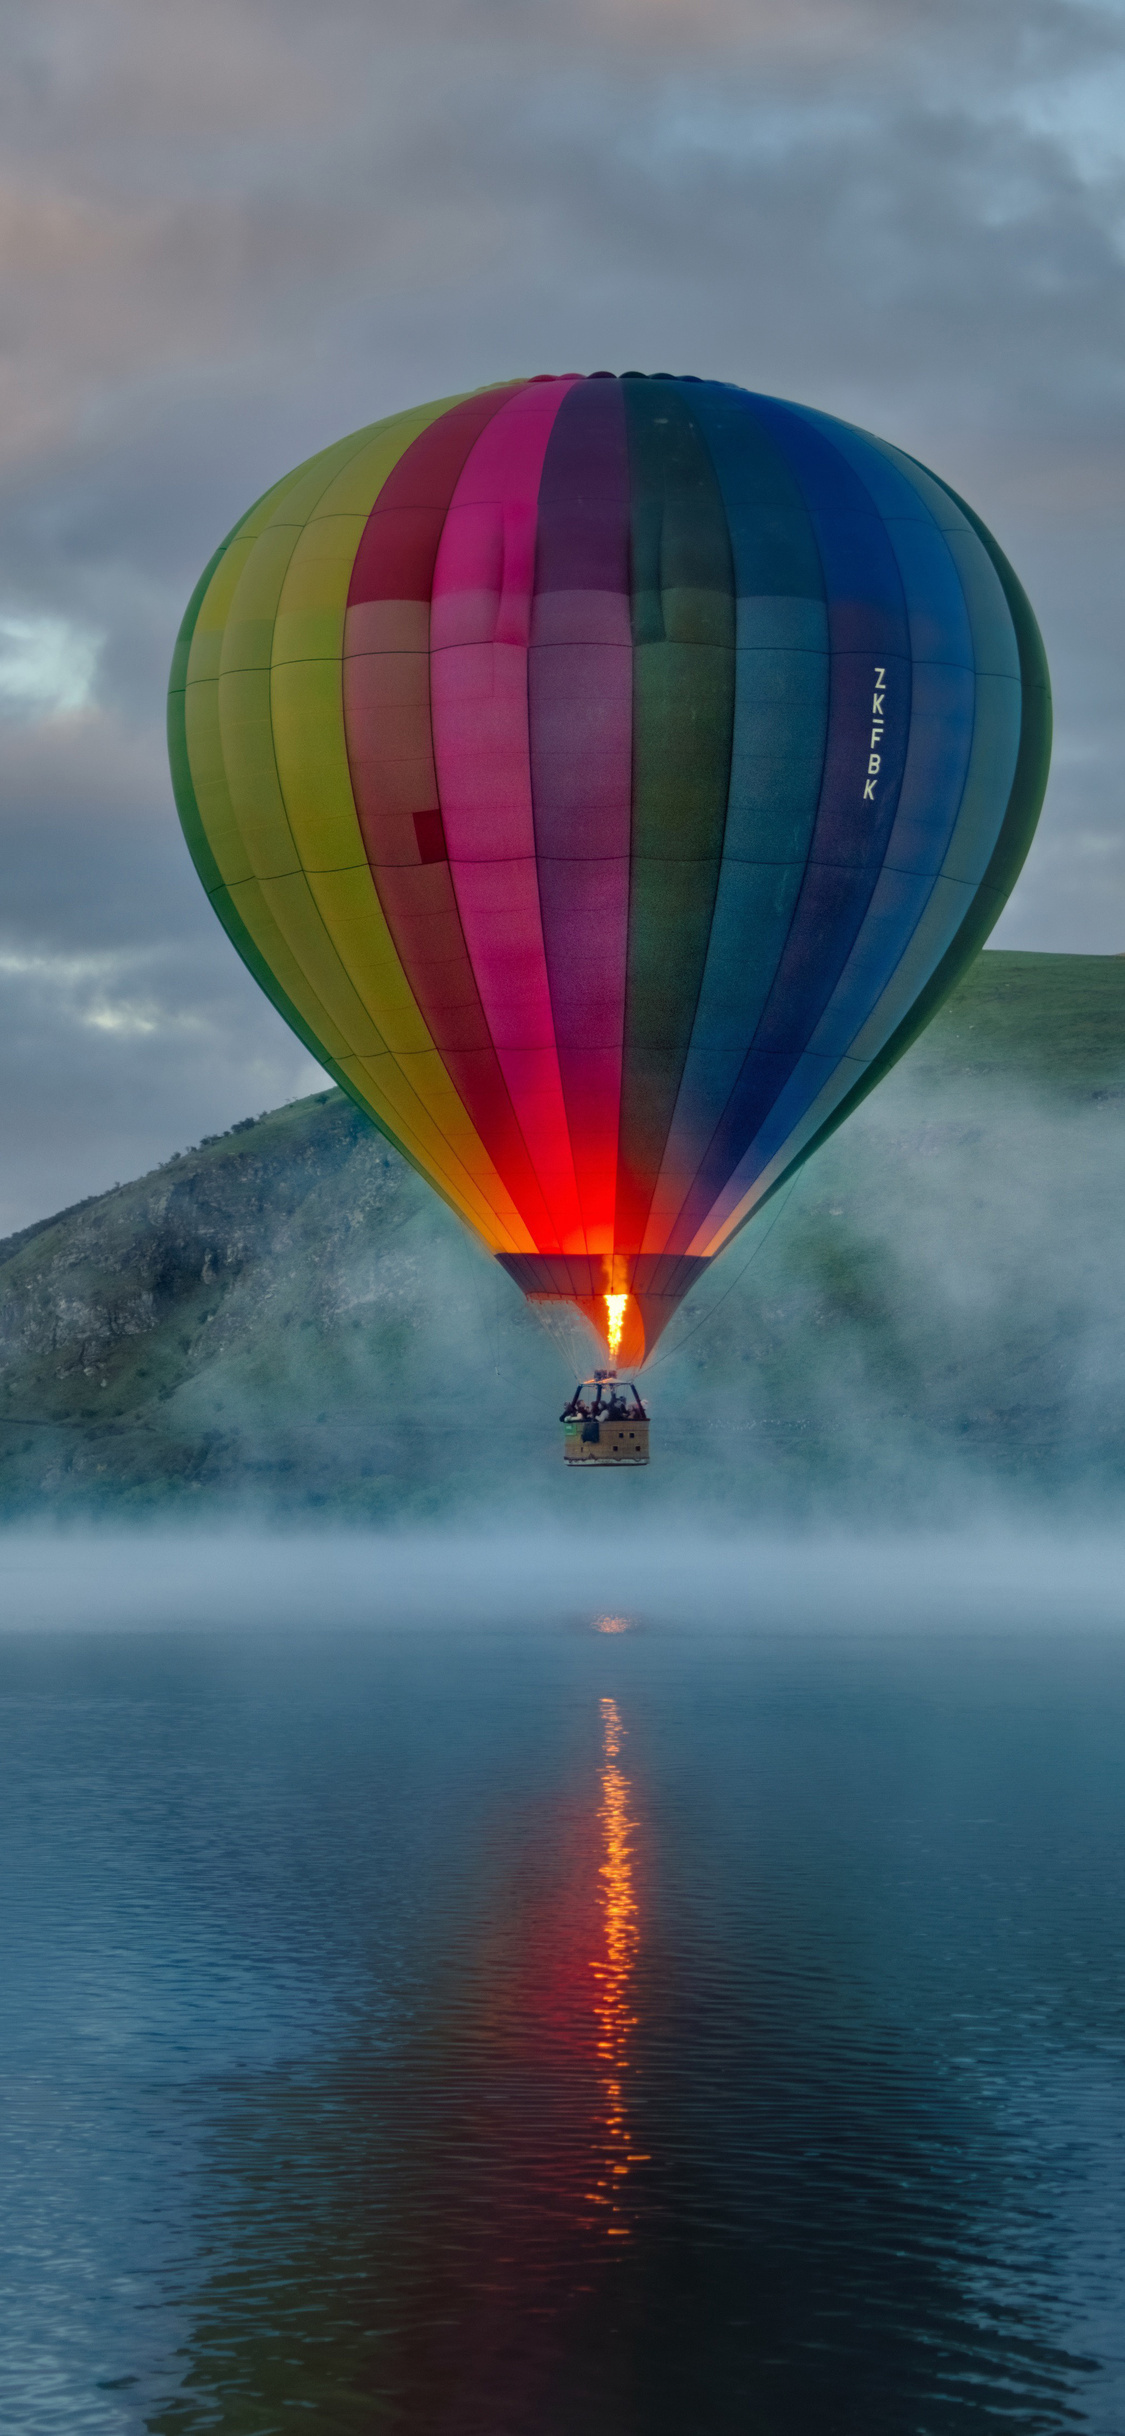 Hot Air Balloon: IK-FBK, Fabric Lifting Envelope, Propane Burner, Balloon Flight. 1130x2440 HD Background.